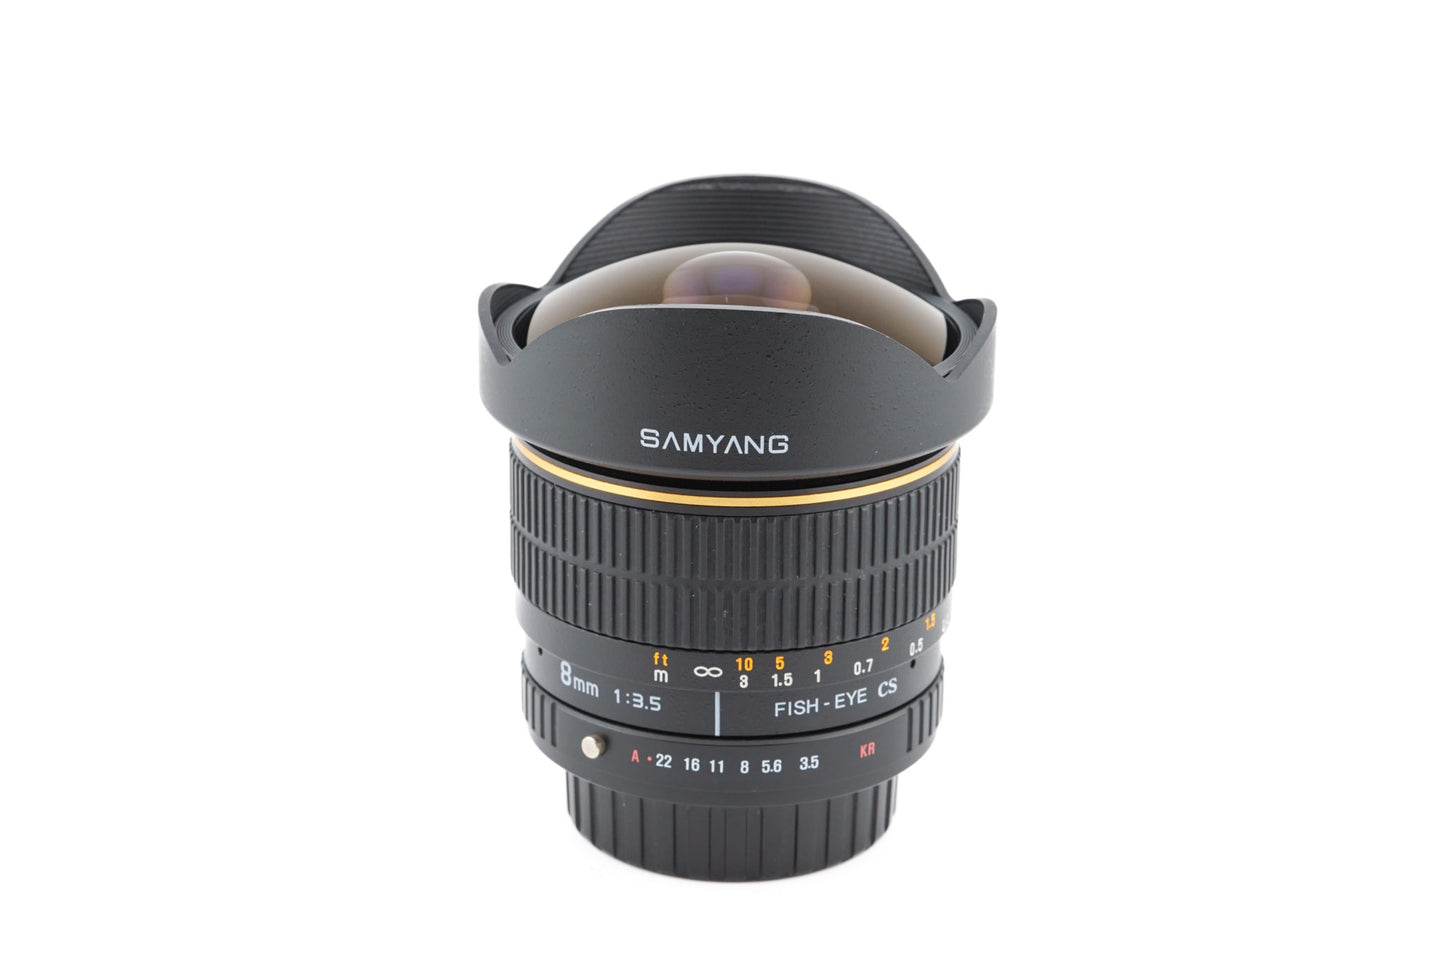 Samyang 8mm f3.5 Fish-Eye CS - Lens